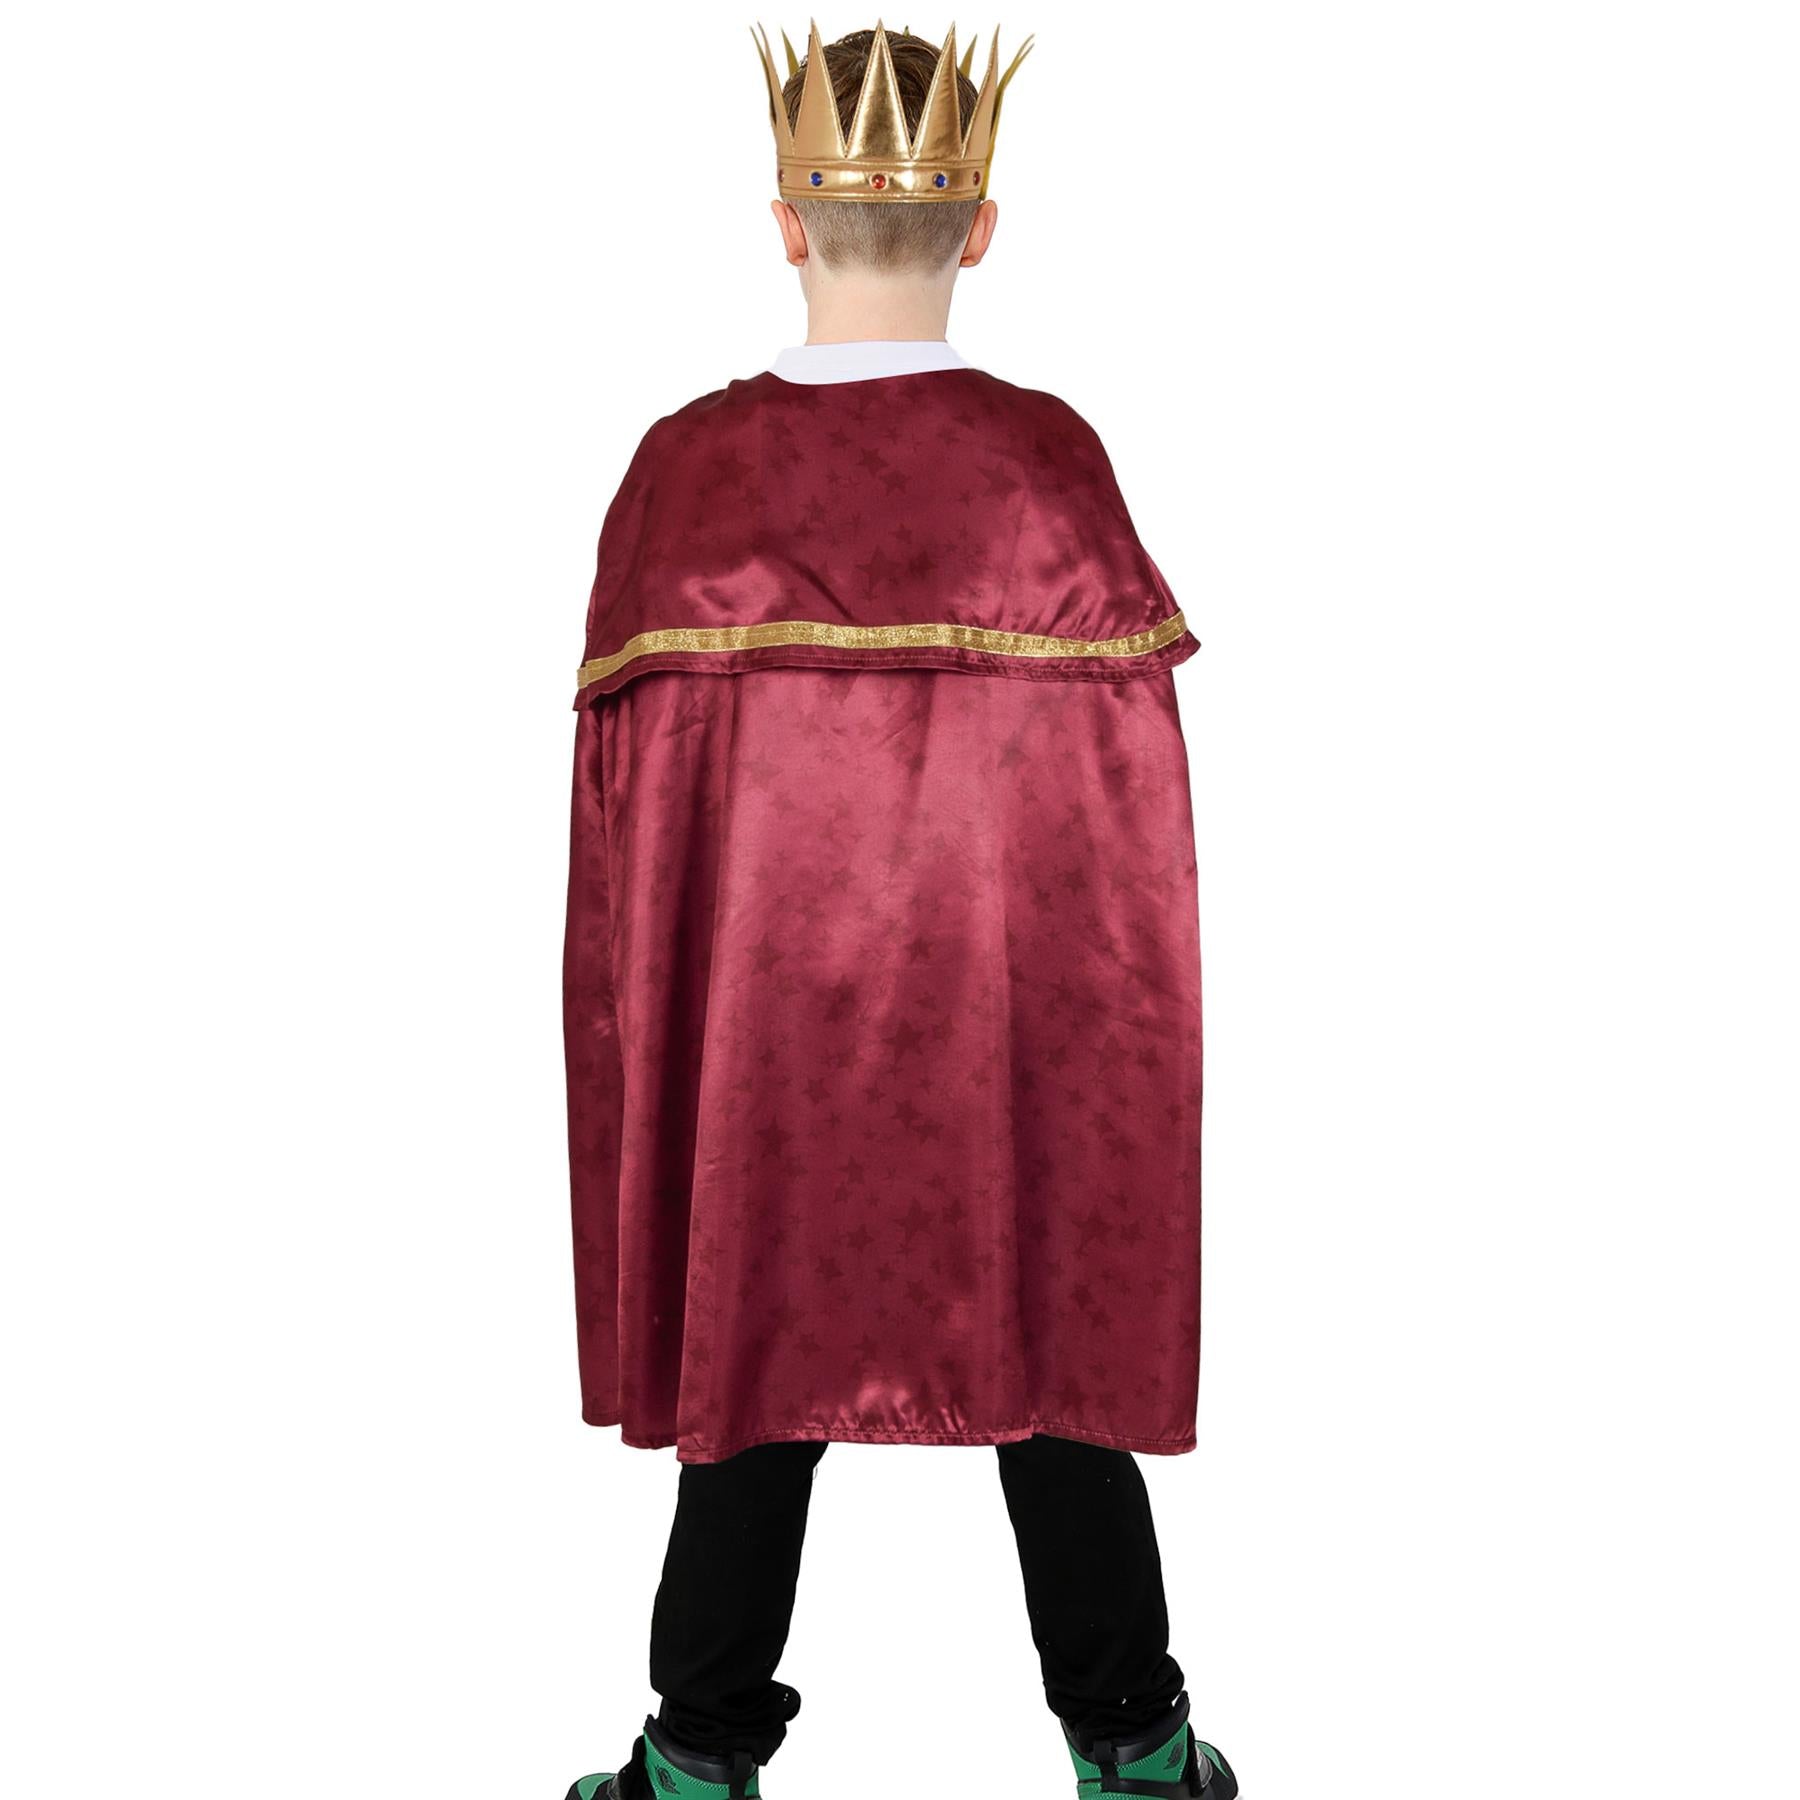 Kids Boys Xmas Nativity Three Kings Wise Man Costume School Plays Fancy Dress